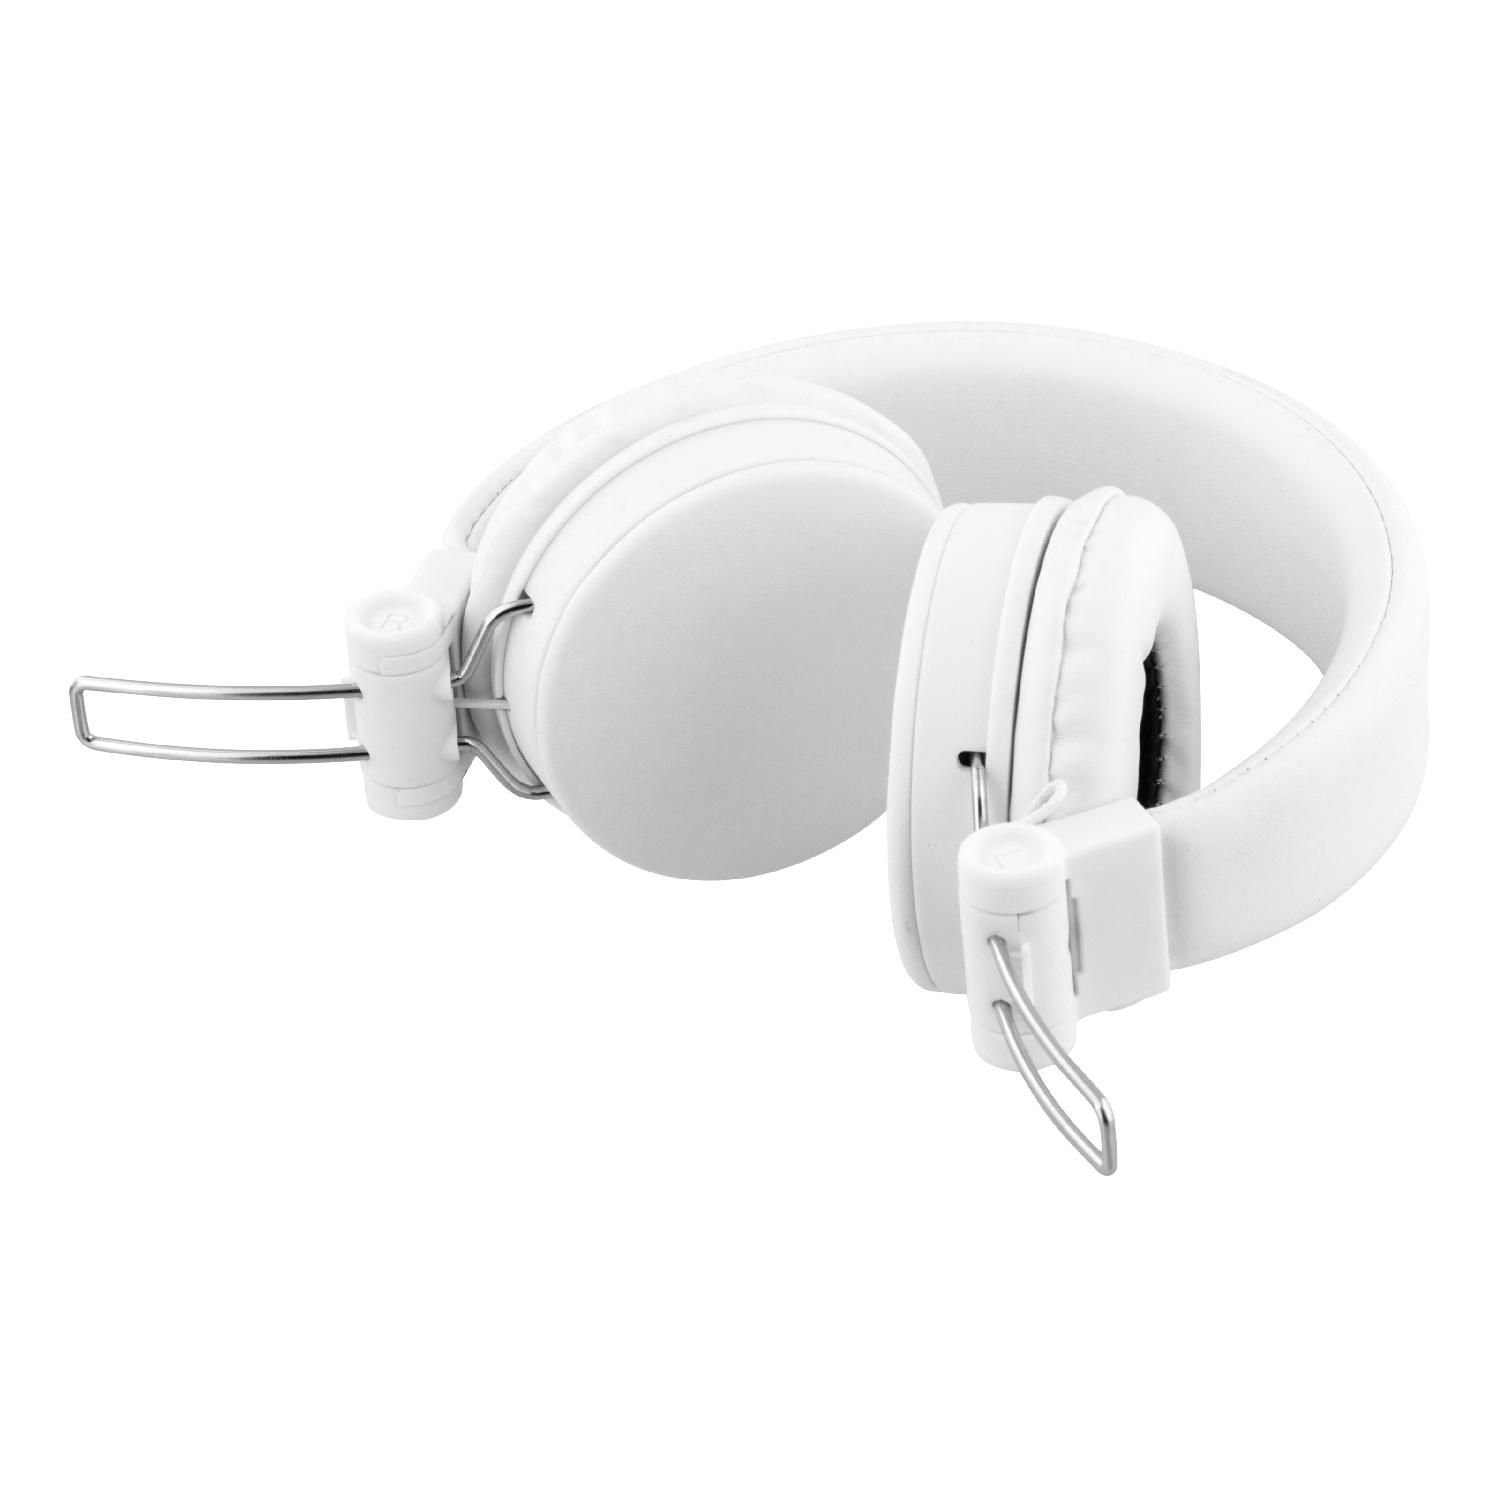 STREETZ Kopfhörer 1,2m Kabel faltbares (integriertes 3.5mm Headset, Herstellergarantie) Jahre Ohrpolster 5 weiß Klinkenanschluss On-Ear-Kopfhörer Mikrofon, inkl